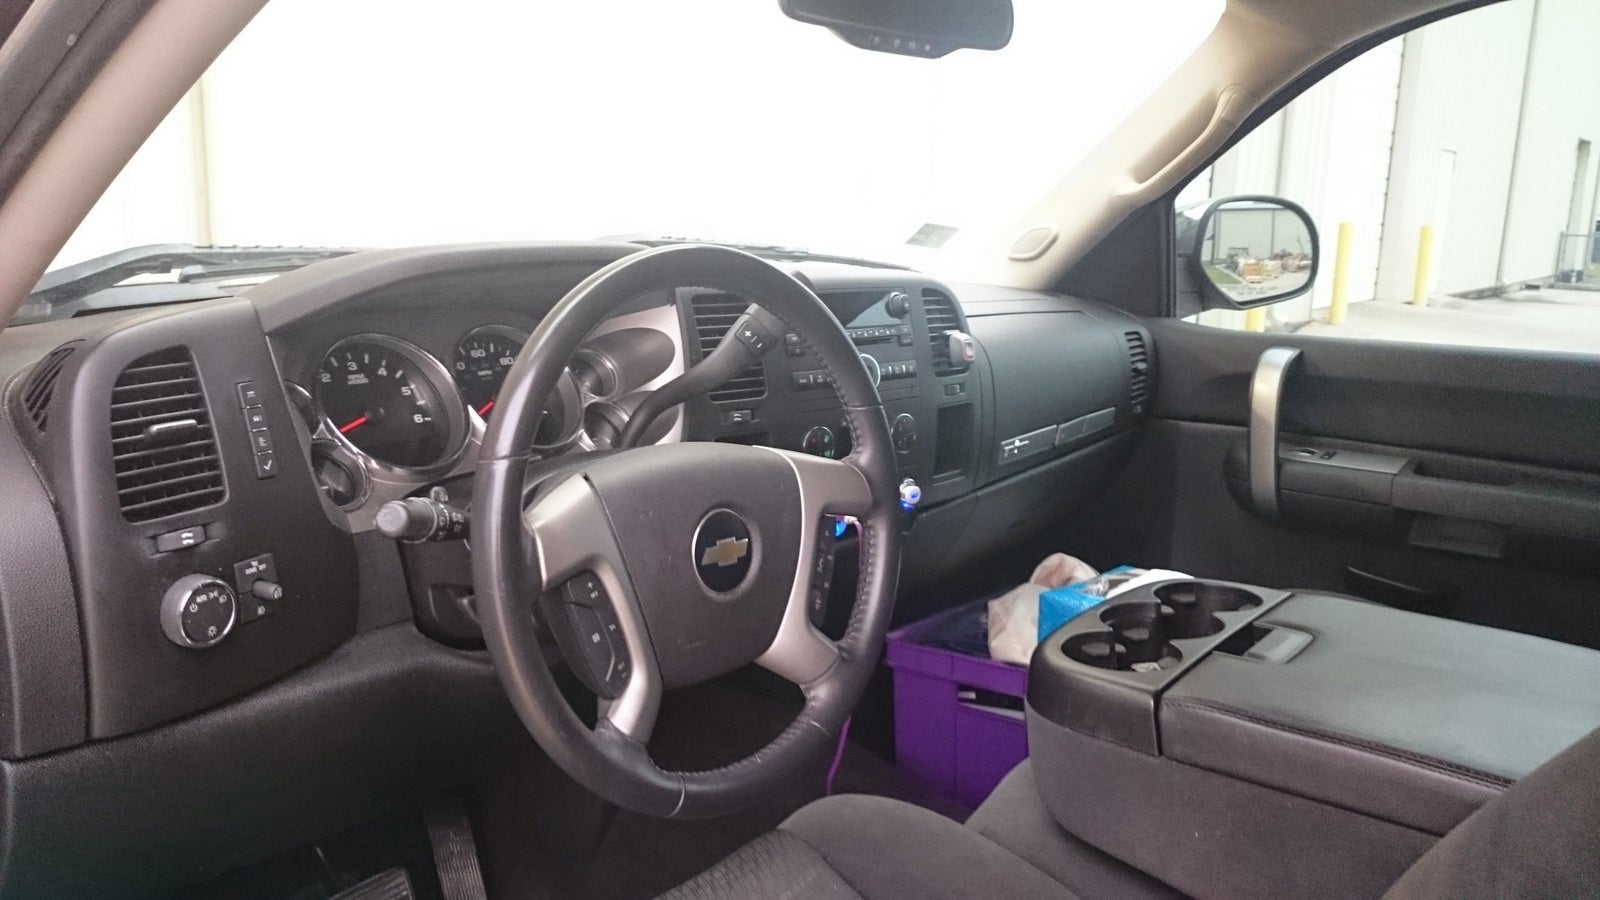 2015 Chevrolet Silverado 1500 Interior Pictures Cargurus